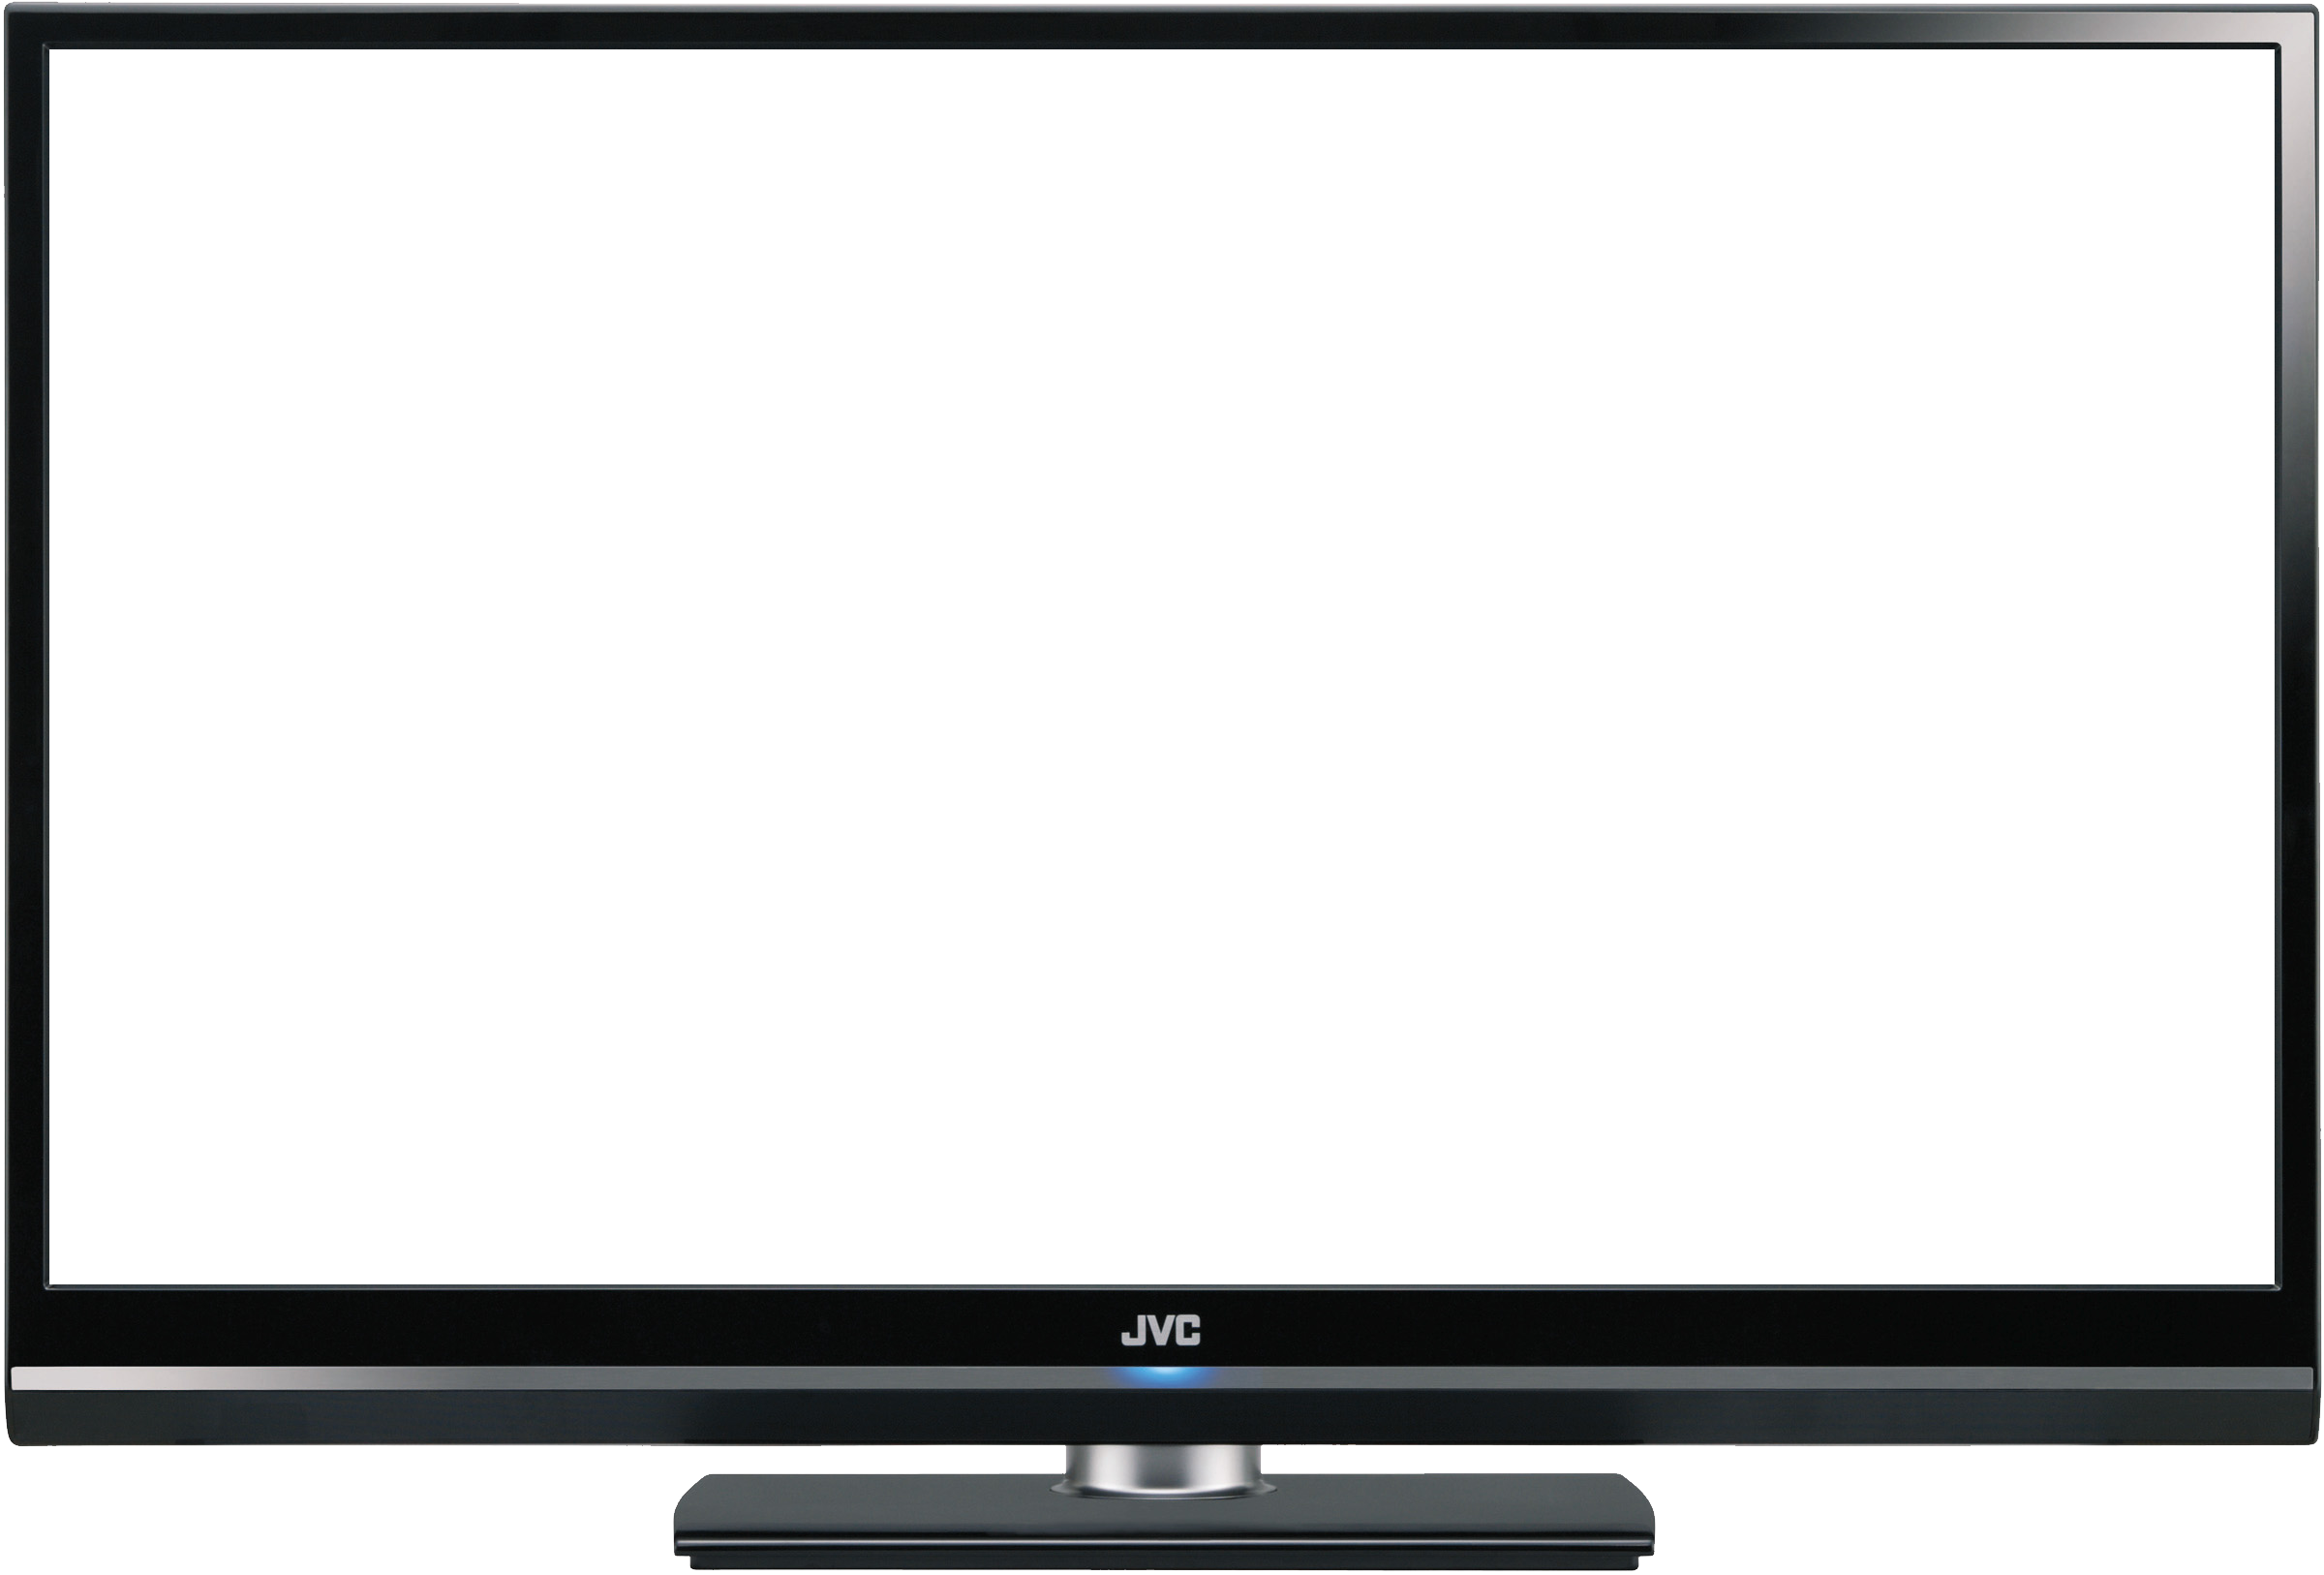 LED TV Background PNG Image